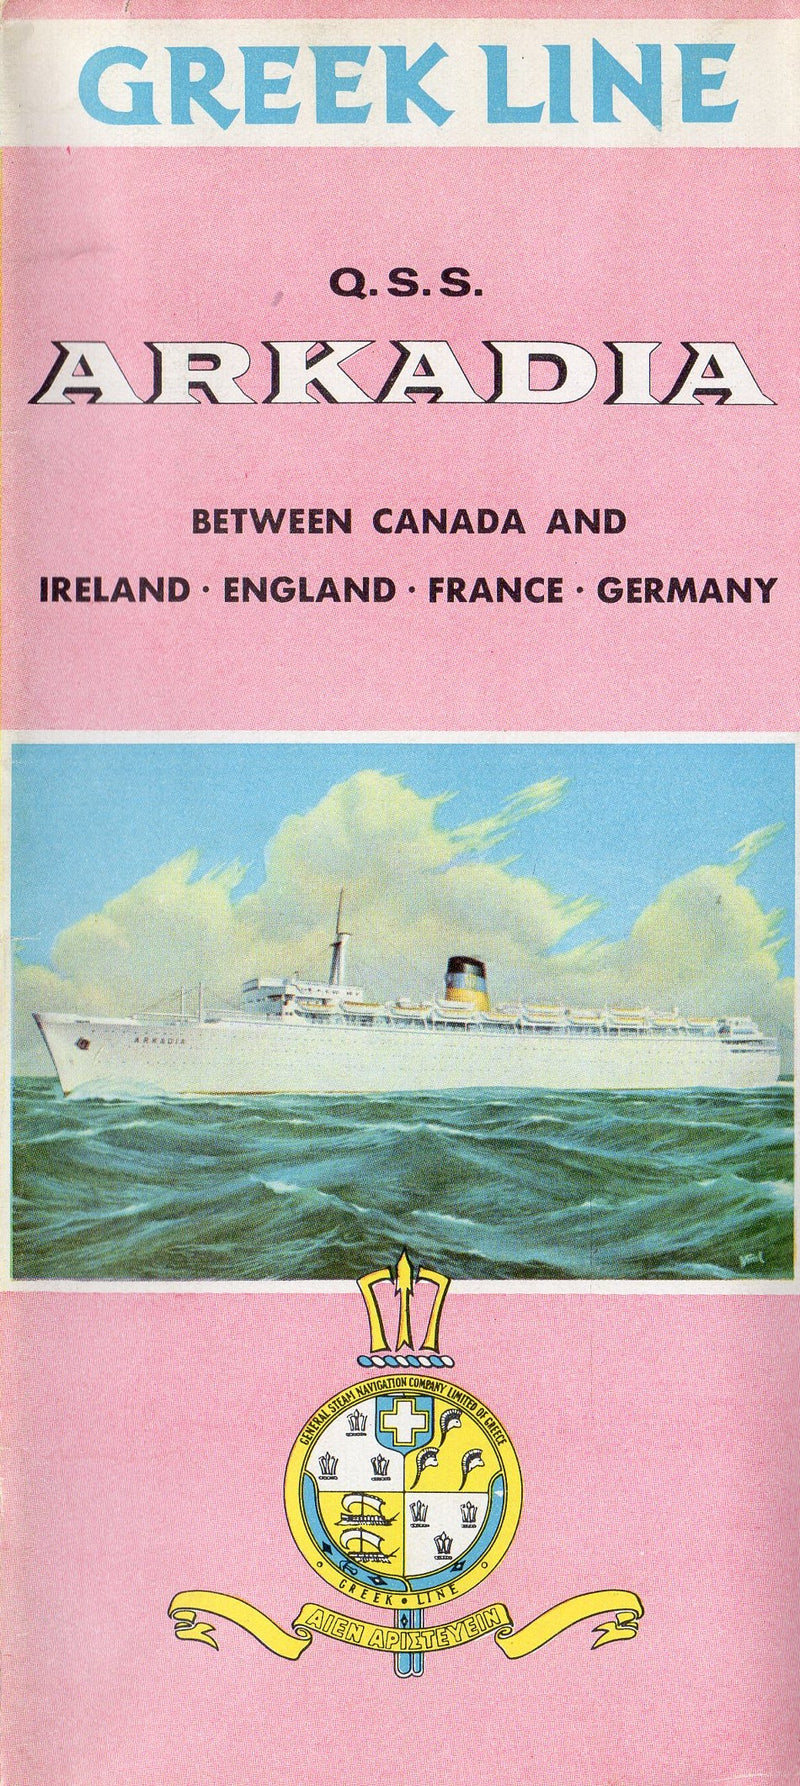 ARKADIA: 1931 - Color interiors brochure right after 1958 transformation